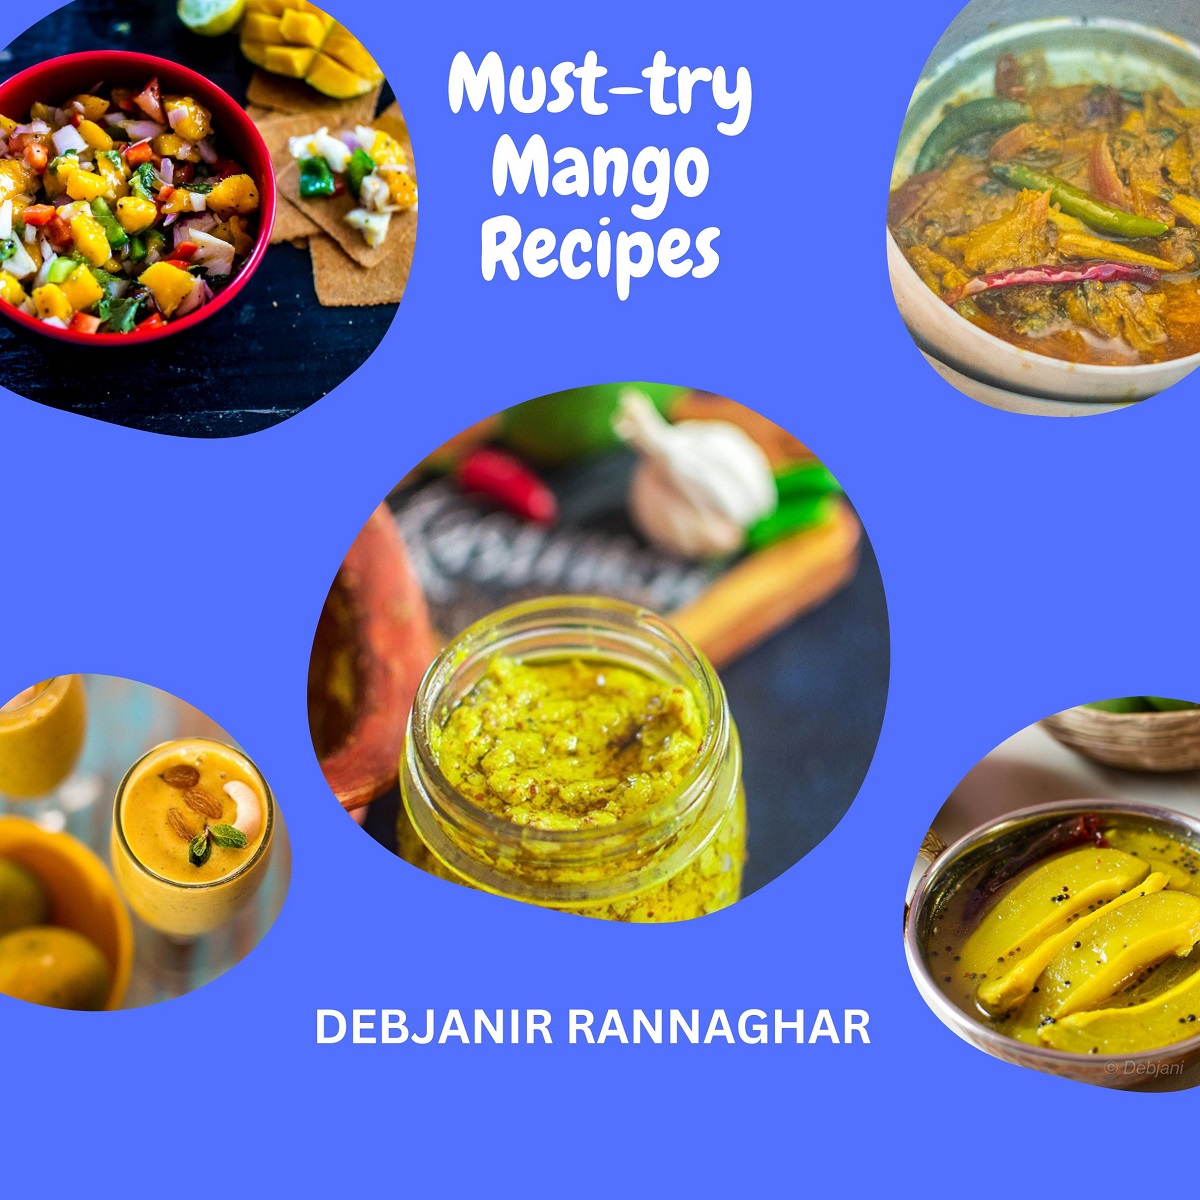 %Must-try mango recipes debjanir rannaghar